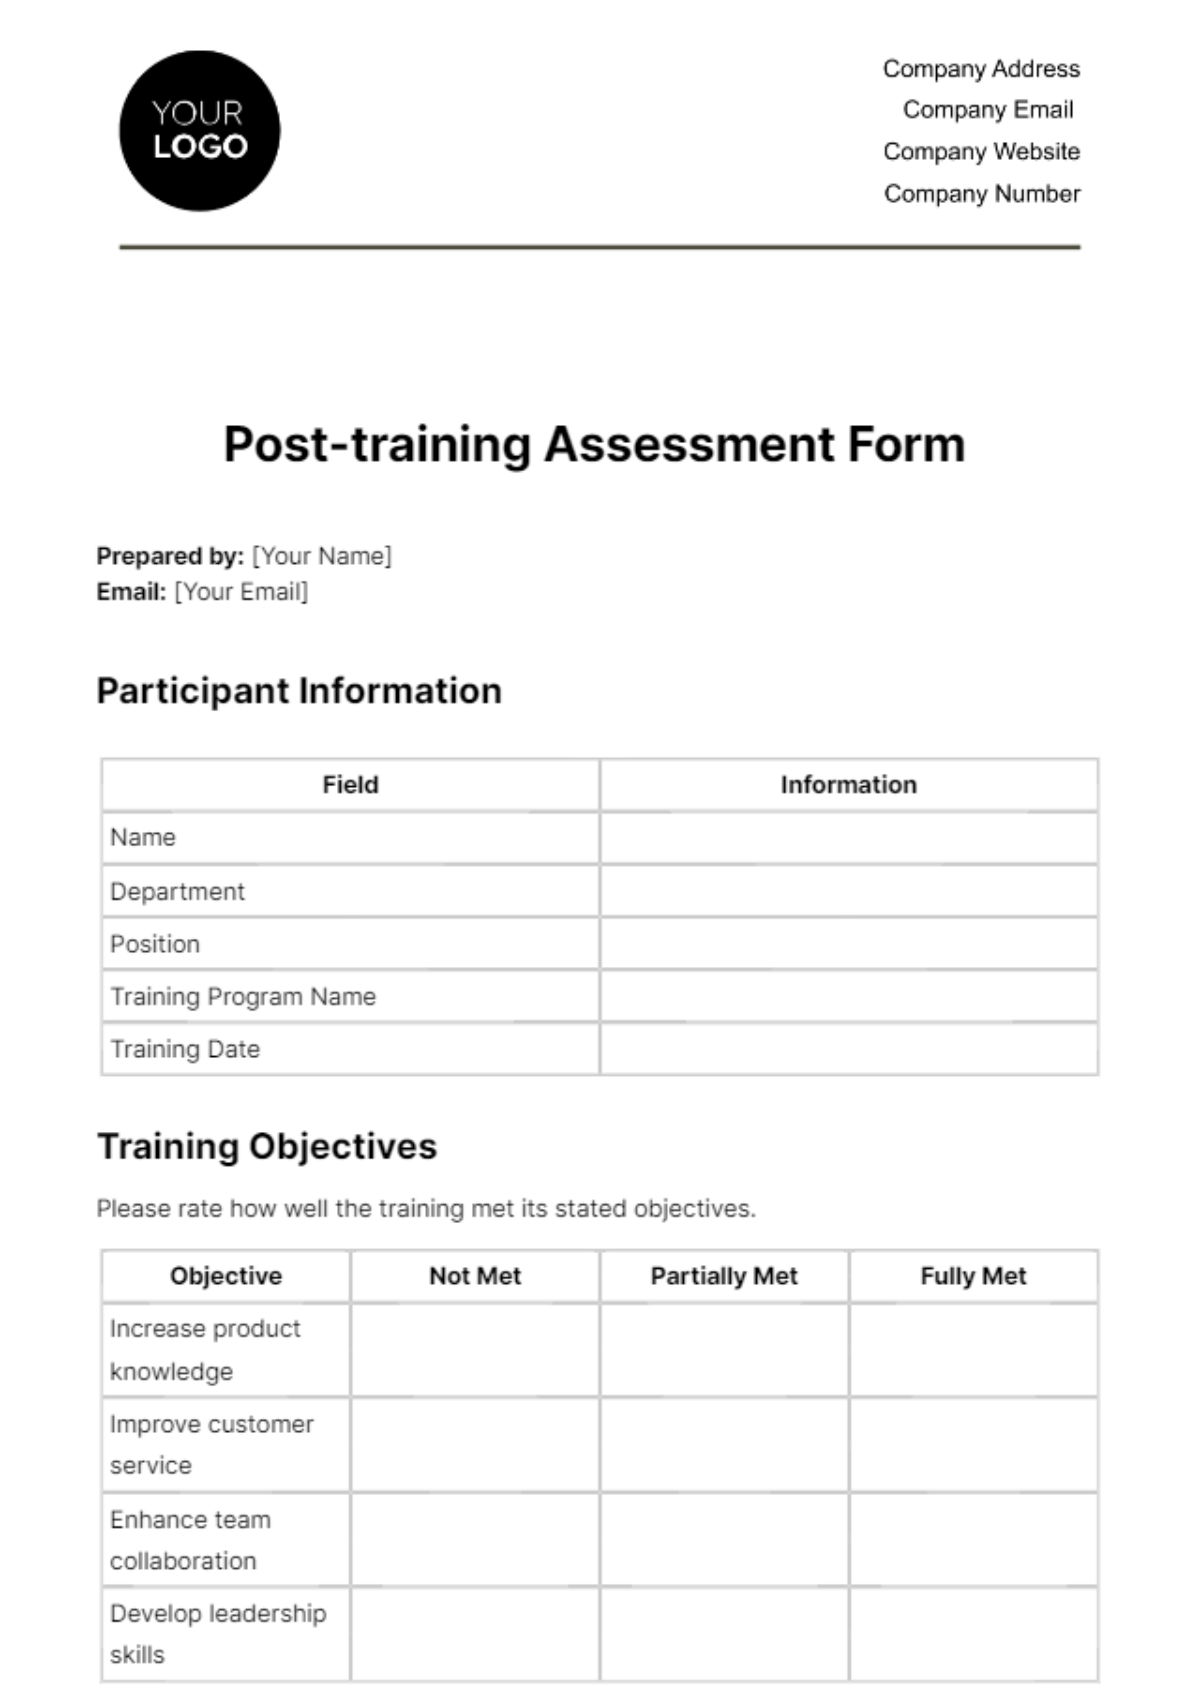 Post-training Assessment Form HR Template